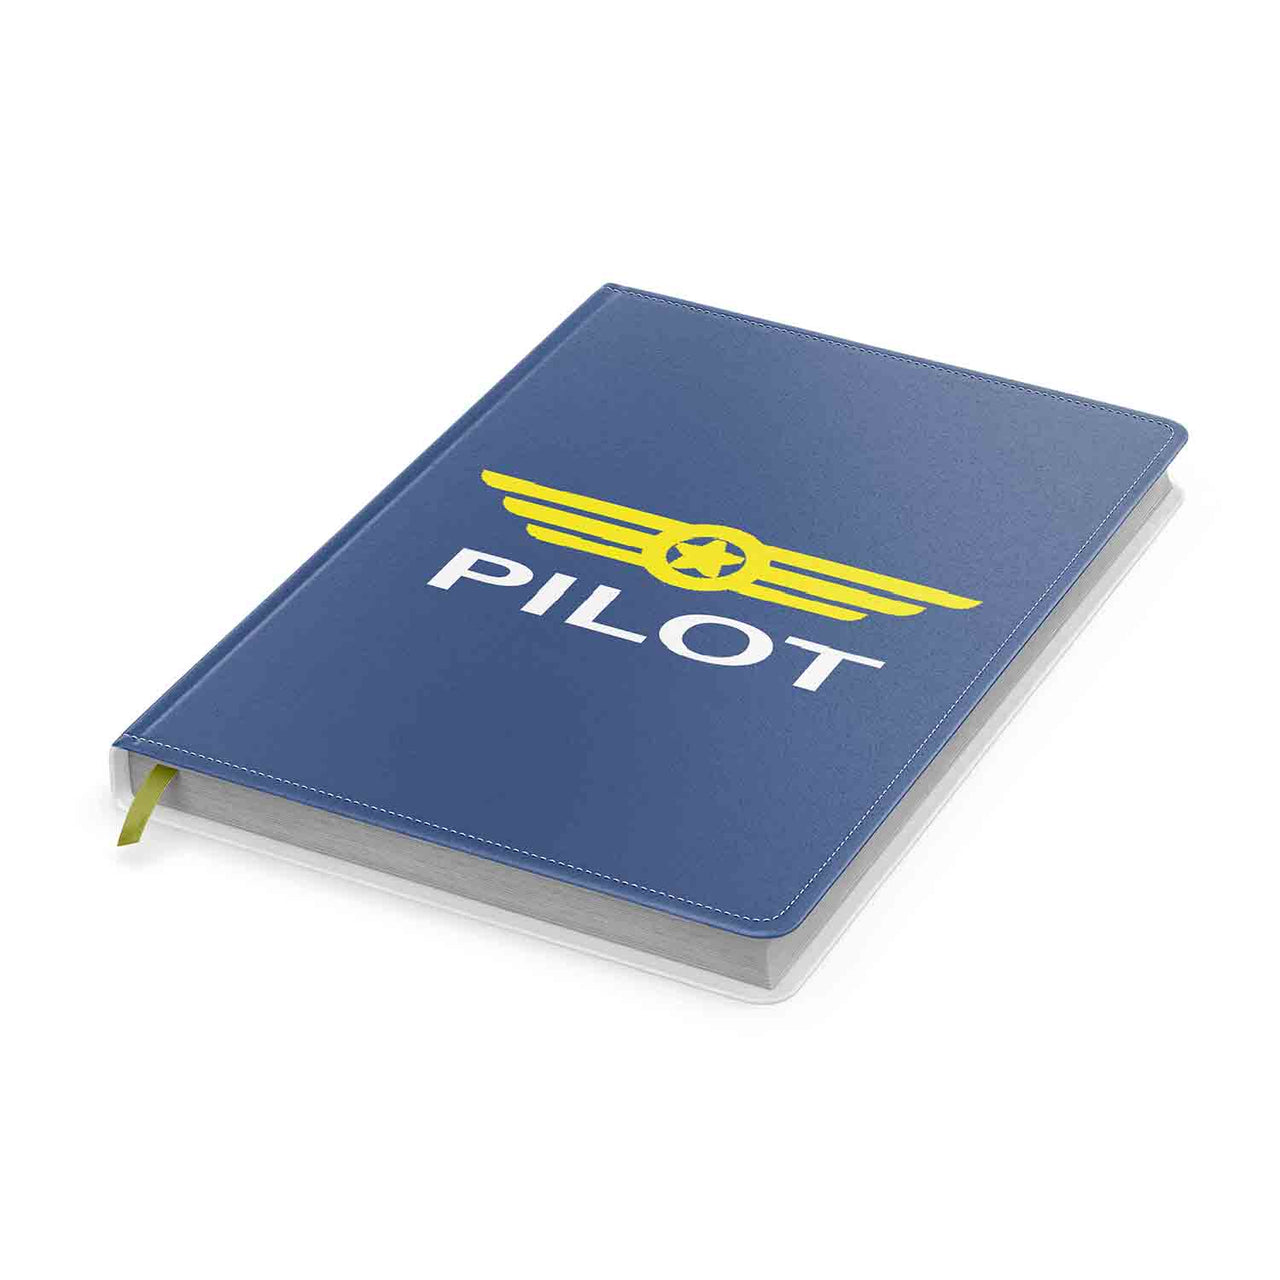 Customizable Name & PILOT BADGE Designed Notebooks